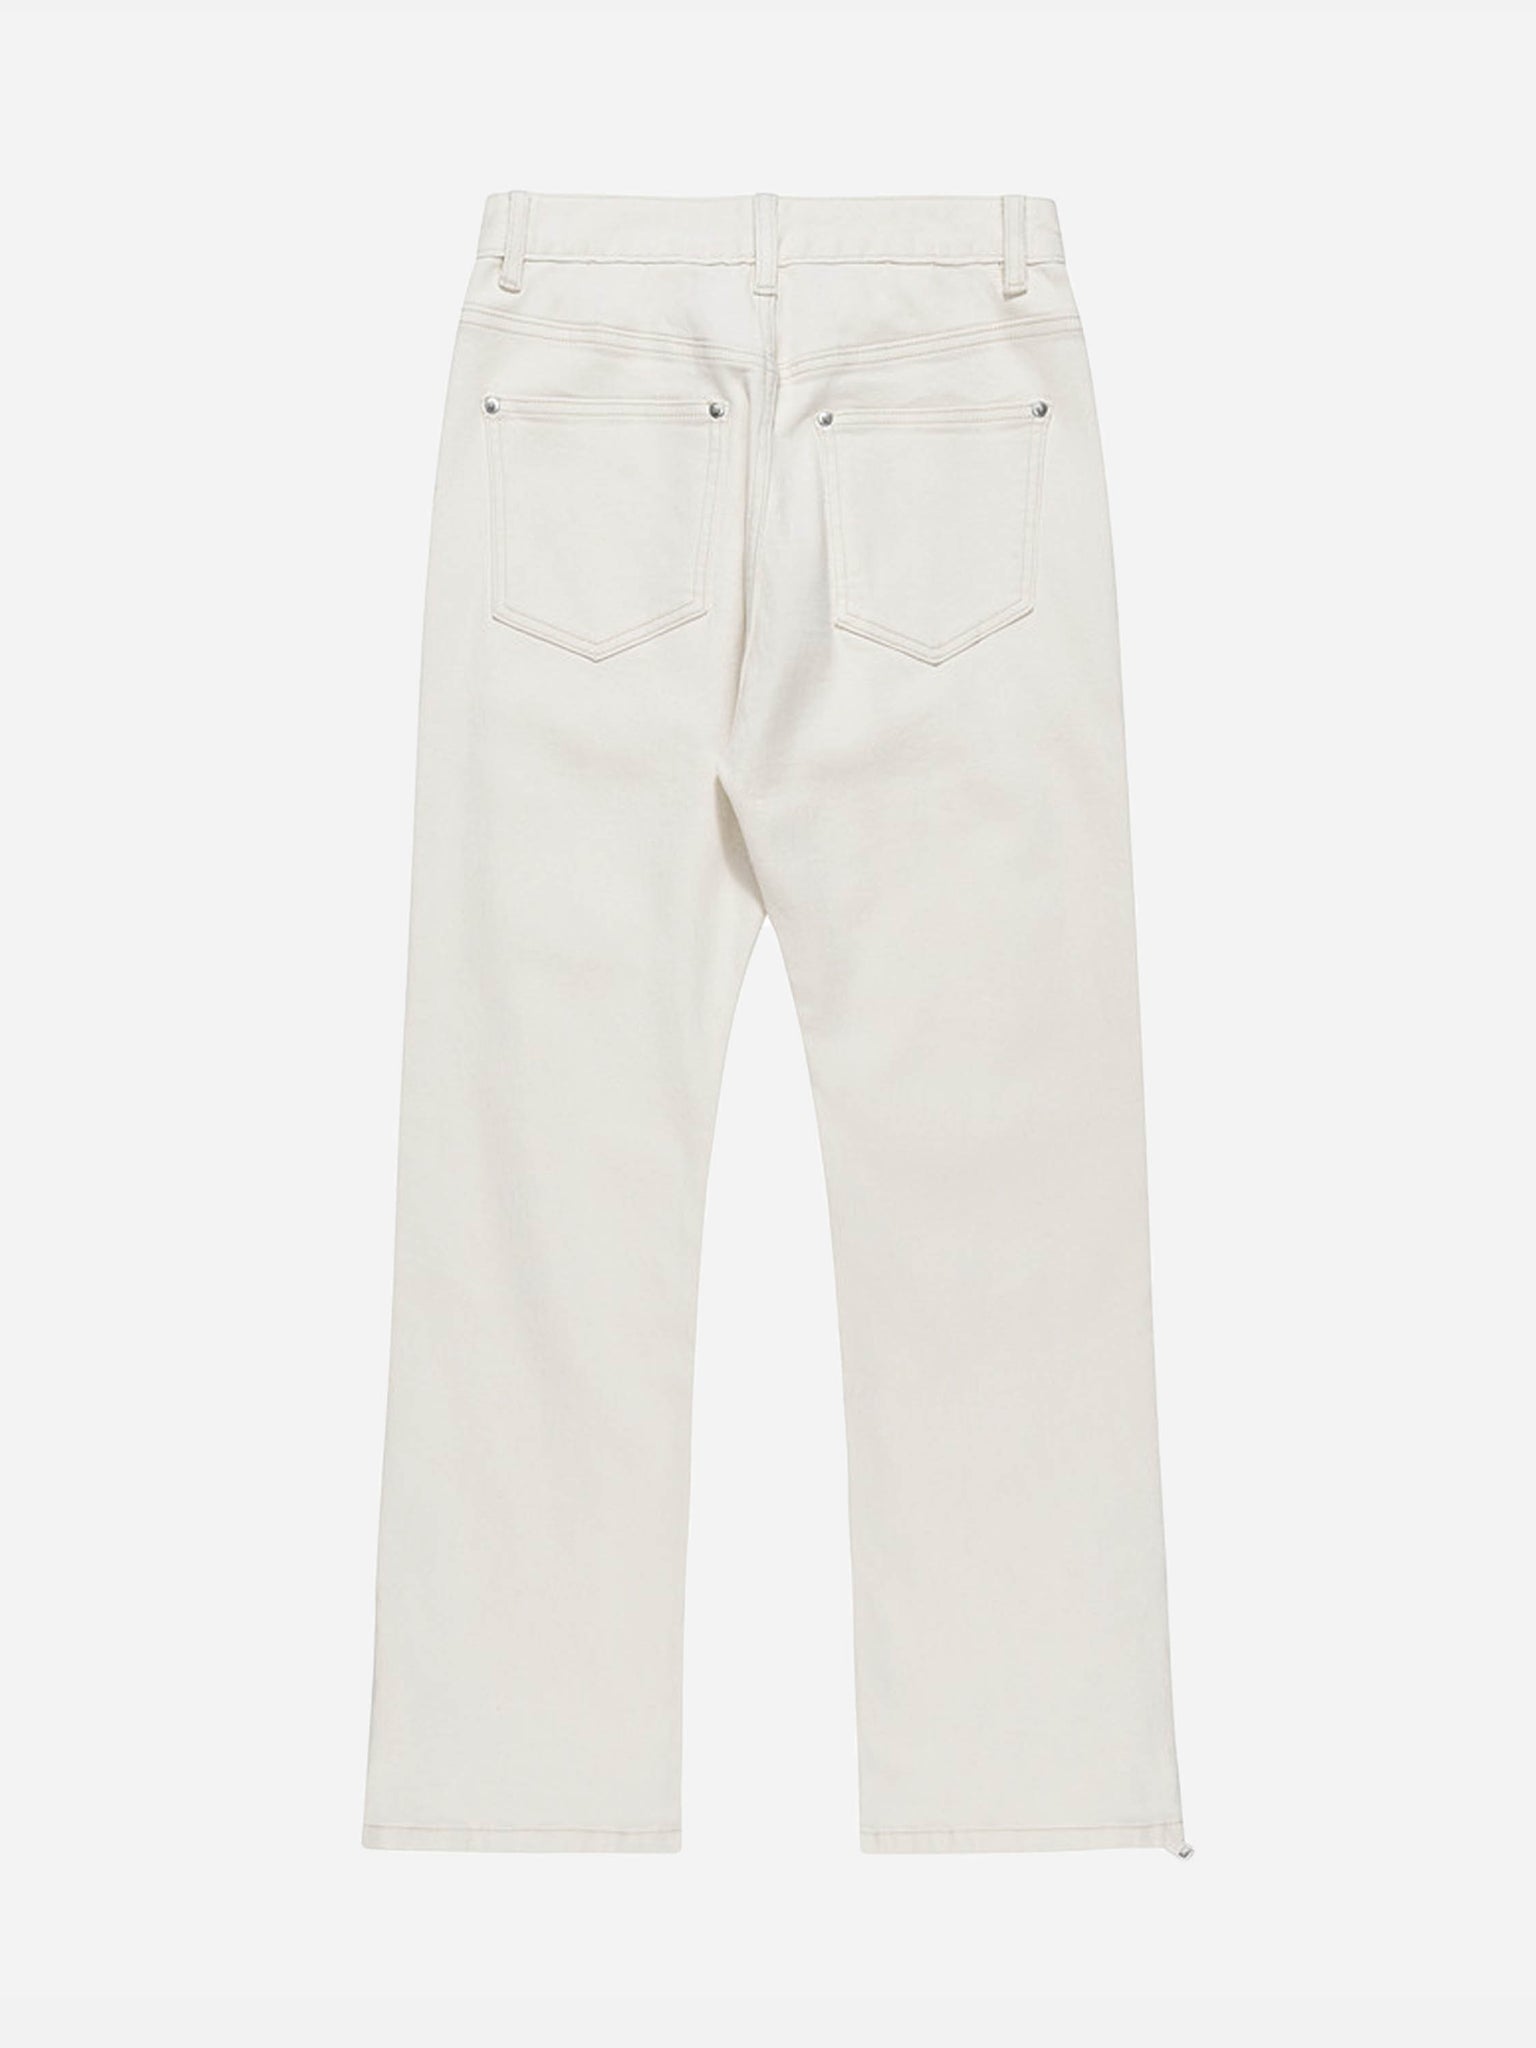 Thesupermade High Street Zipper Patchwork Pocket Denim Pants Straight